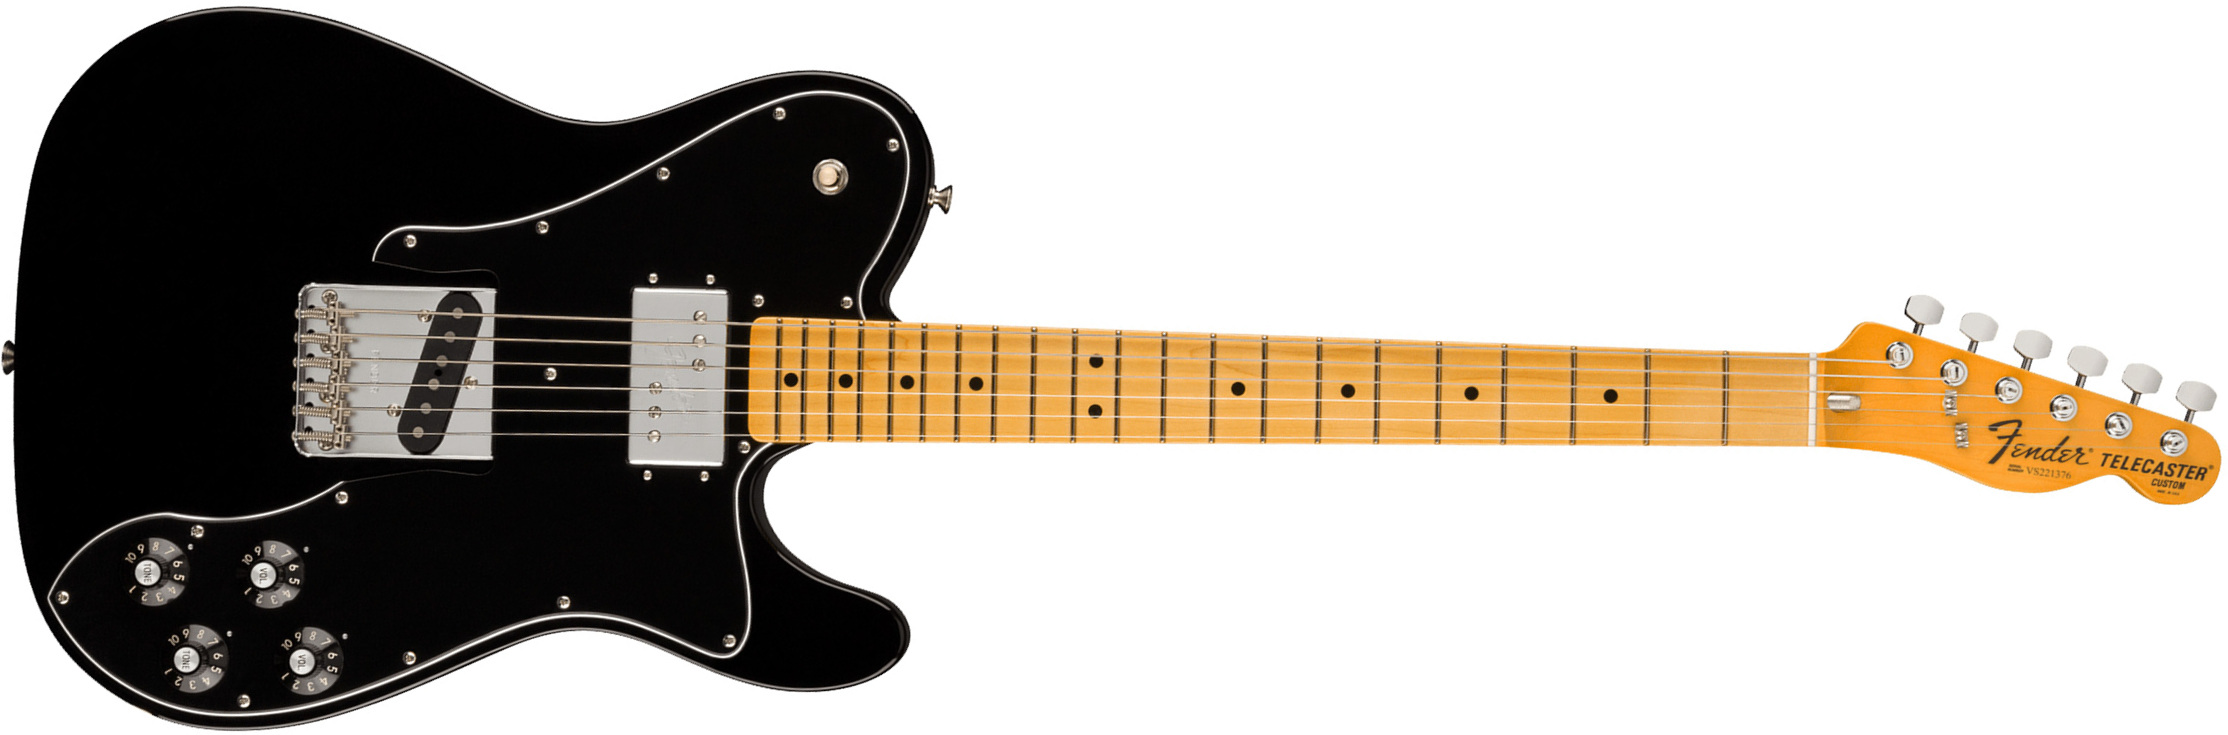 Fender Tele Custom 1977 American Vintage Ii Usa Sh Ht Mn - Black - Guitarra eléctrica con forma de tel - Main picture